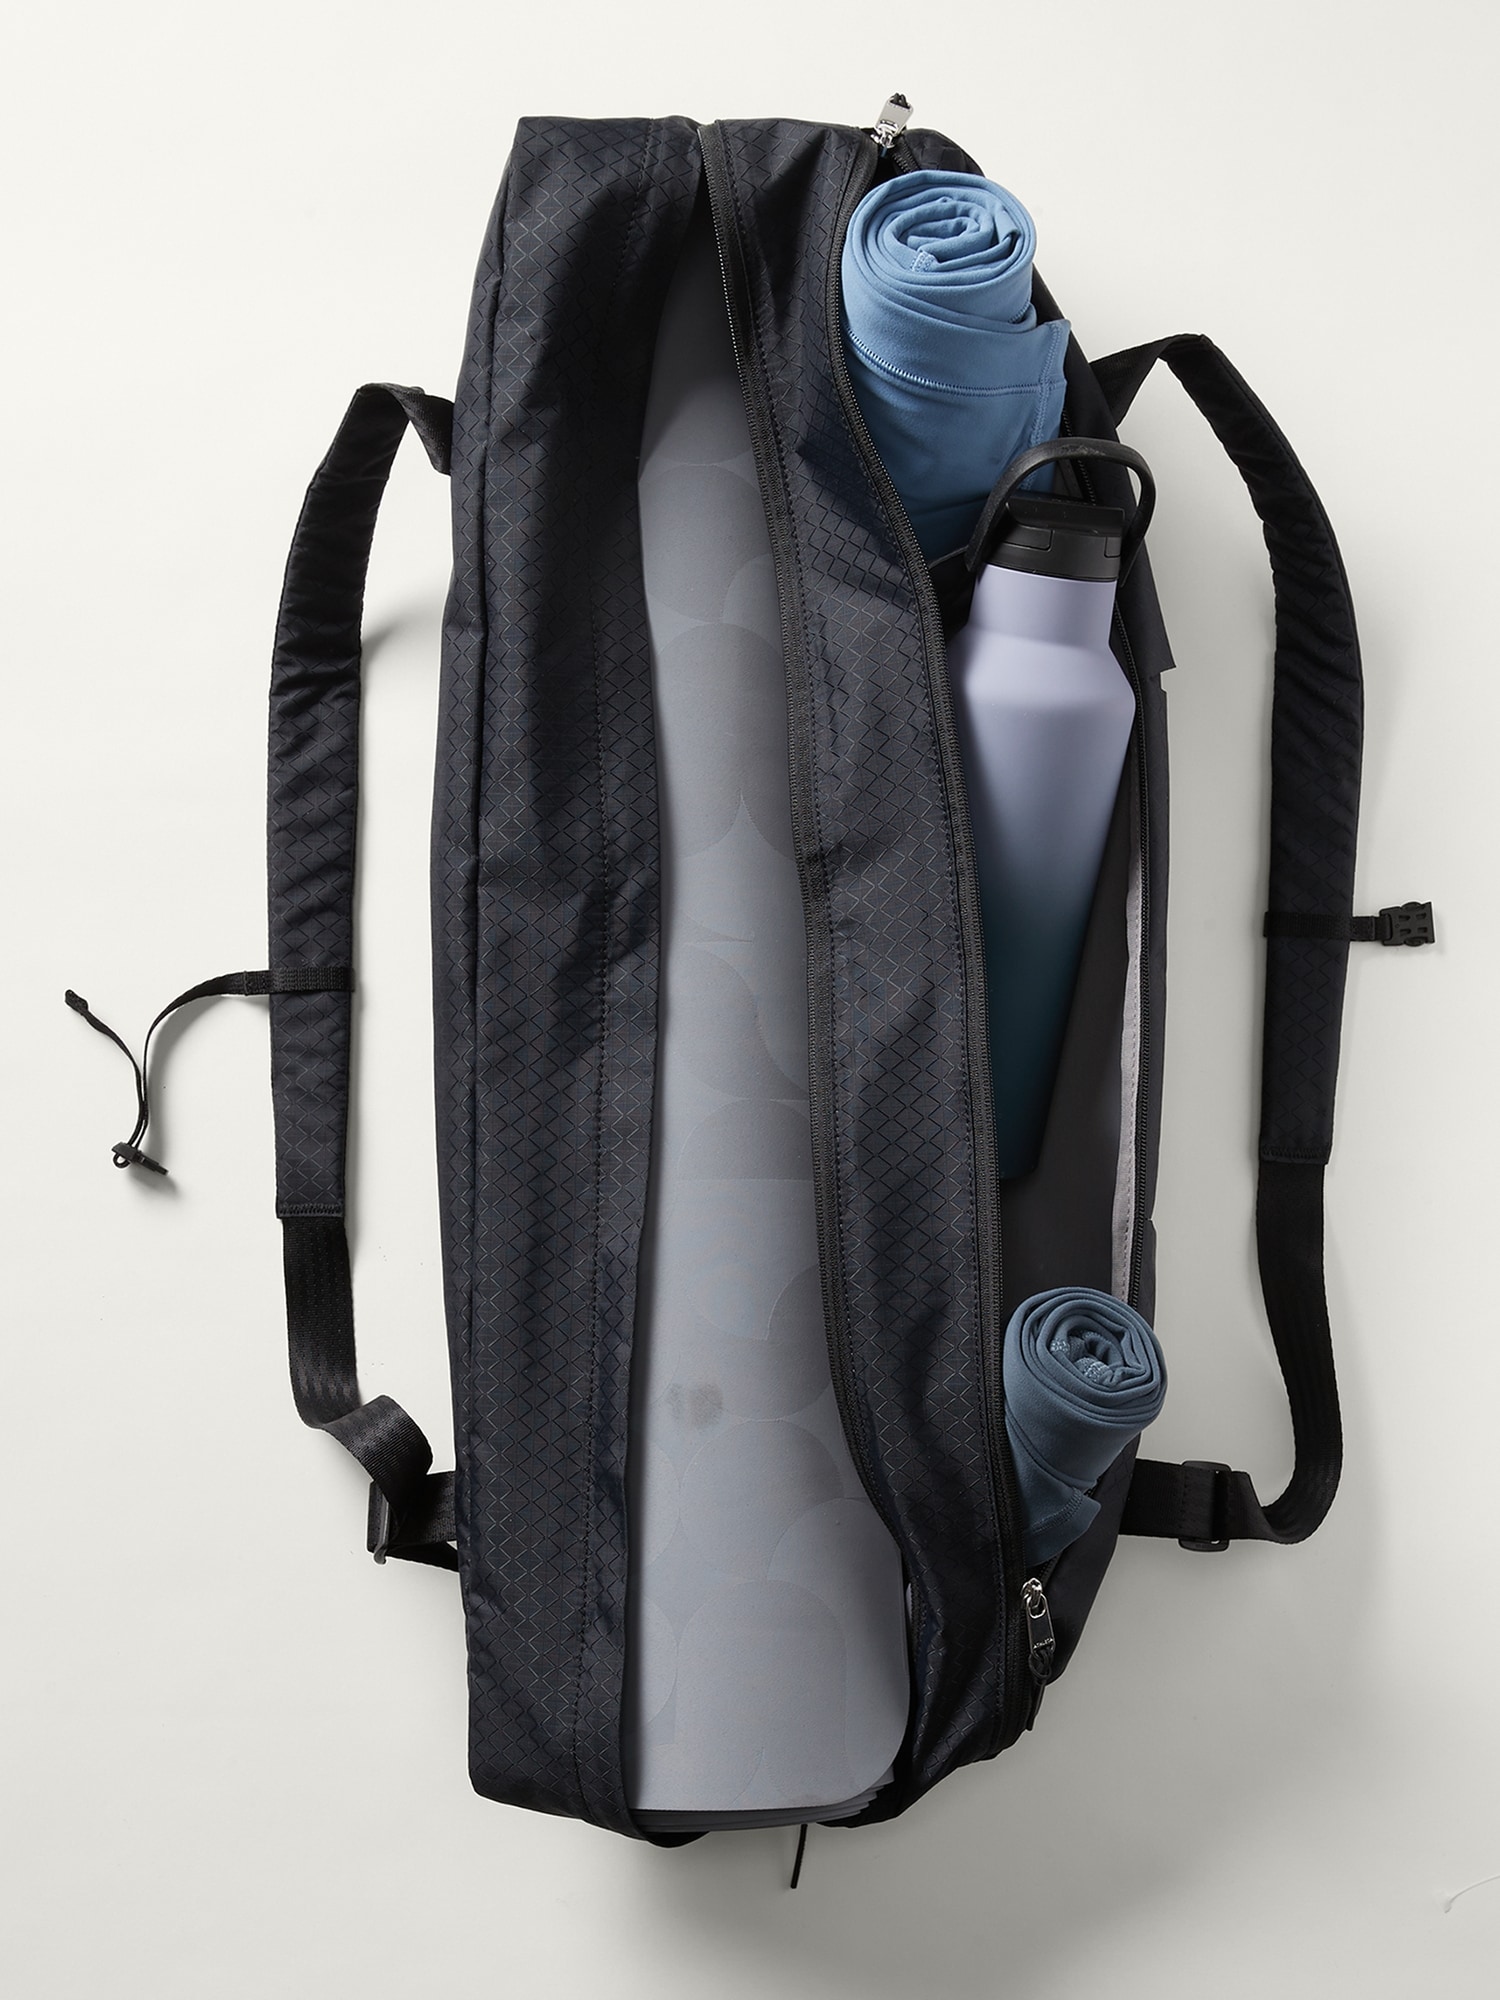 Masaya Yoga Mat Backpack with Shoe Bags- Lightweight, Multi-Purpose  Backpack- Waterproof 25L Sport Gym Tote Bag for Travel, Hiking, School-  Laptop